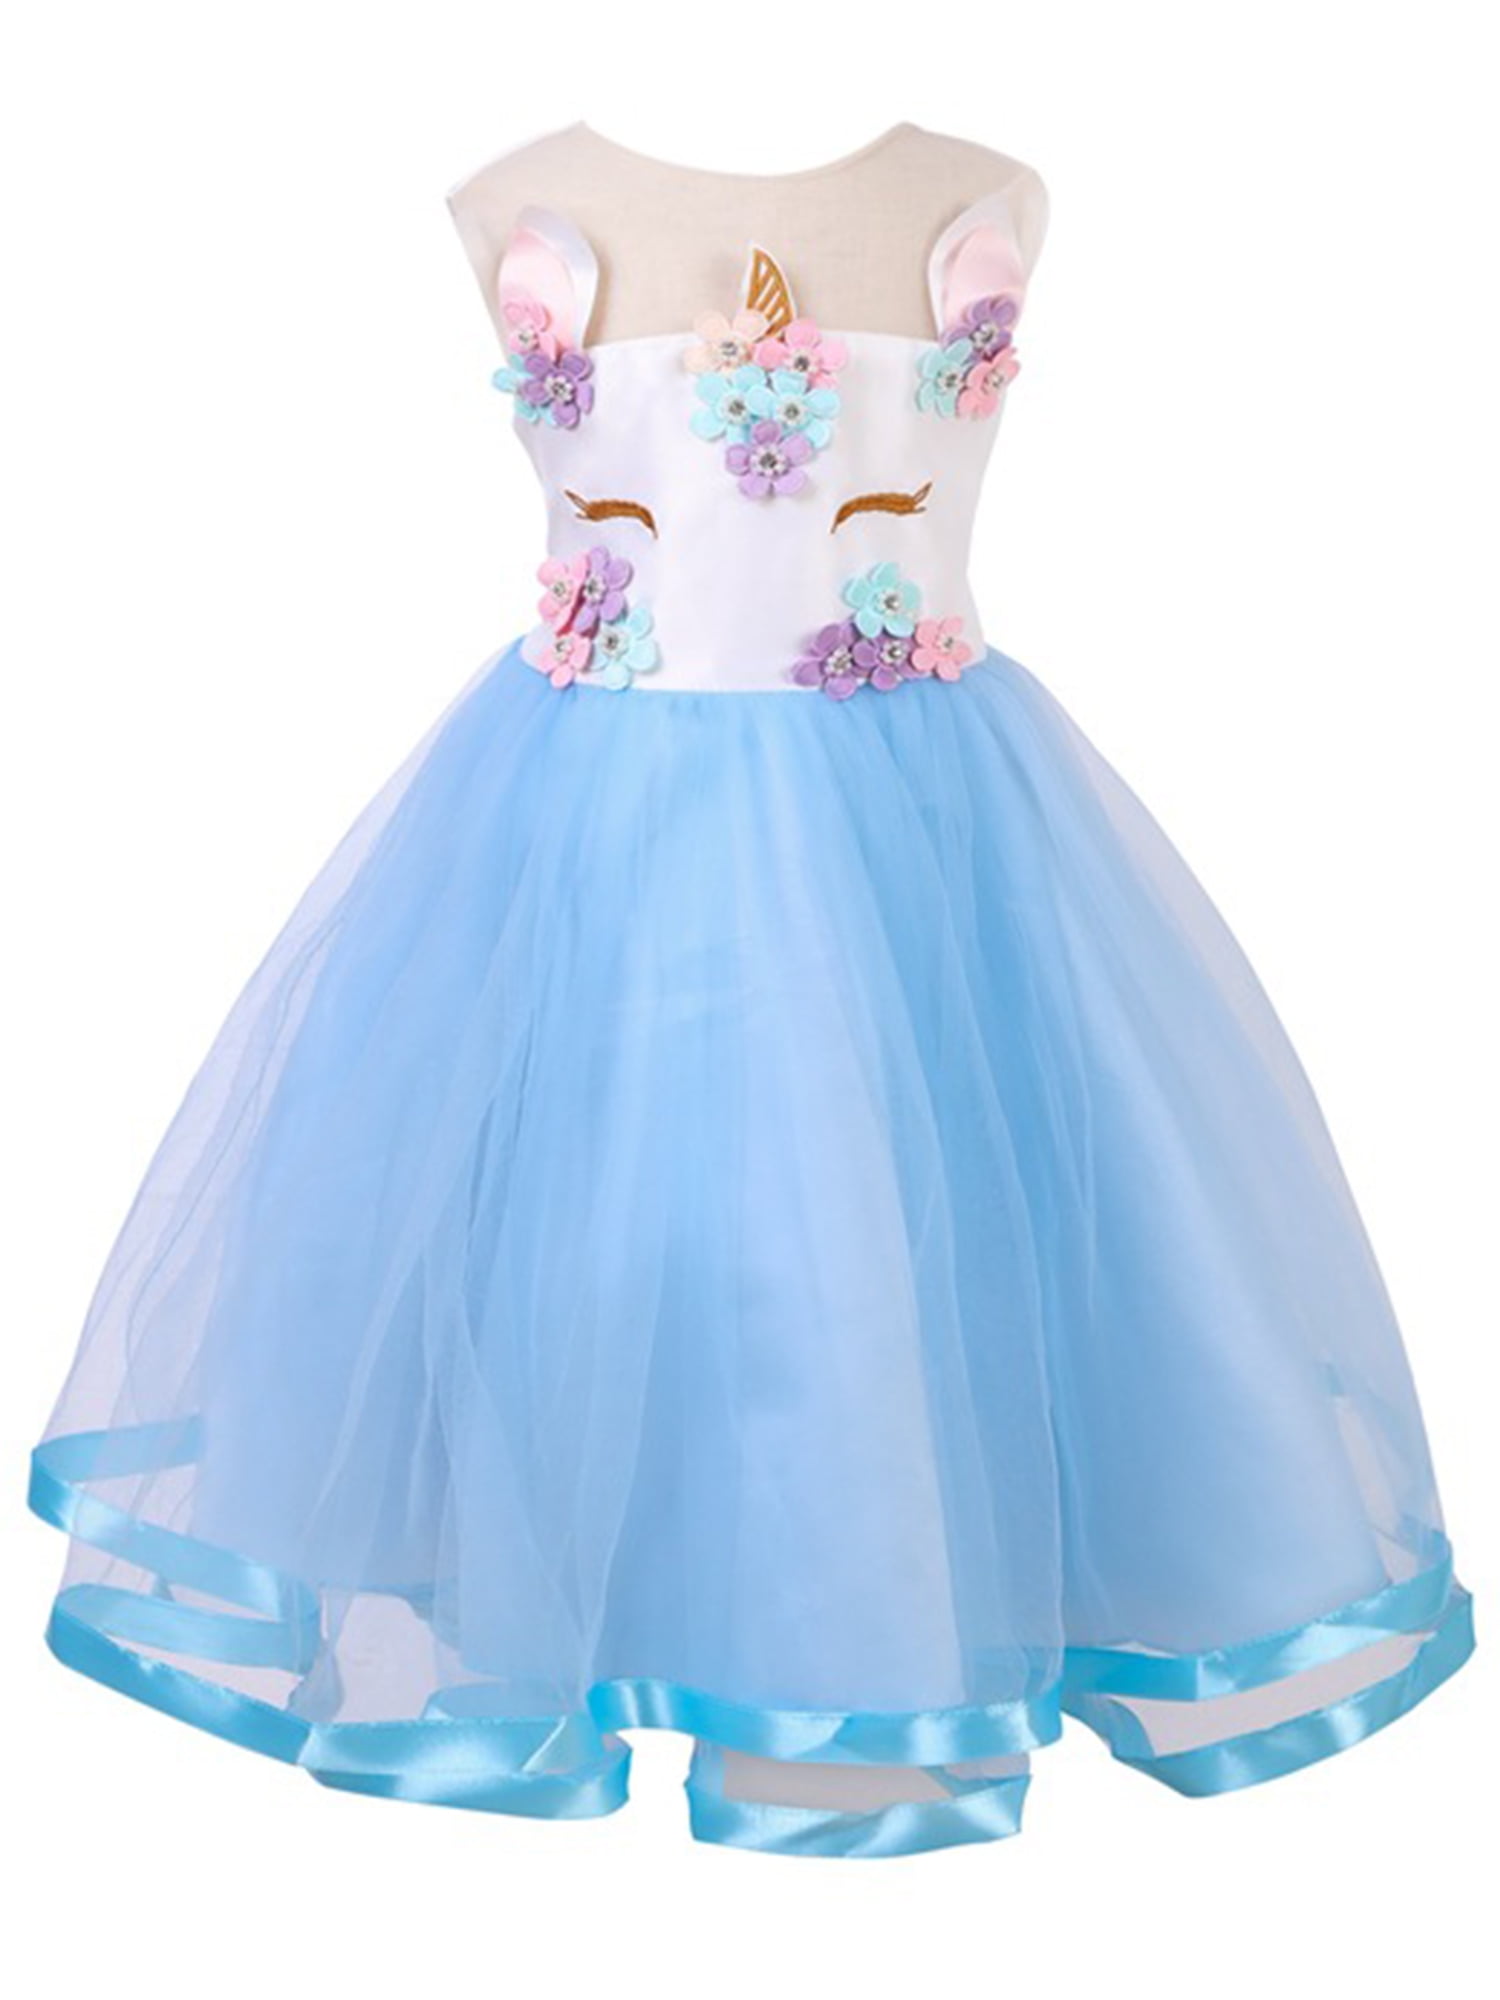 Girls Party Dress Kids Chiffon Long Gown Princess Pageant Wedding Birthday Skirt